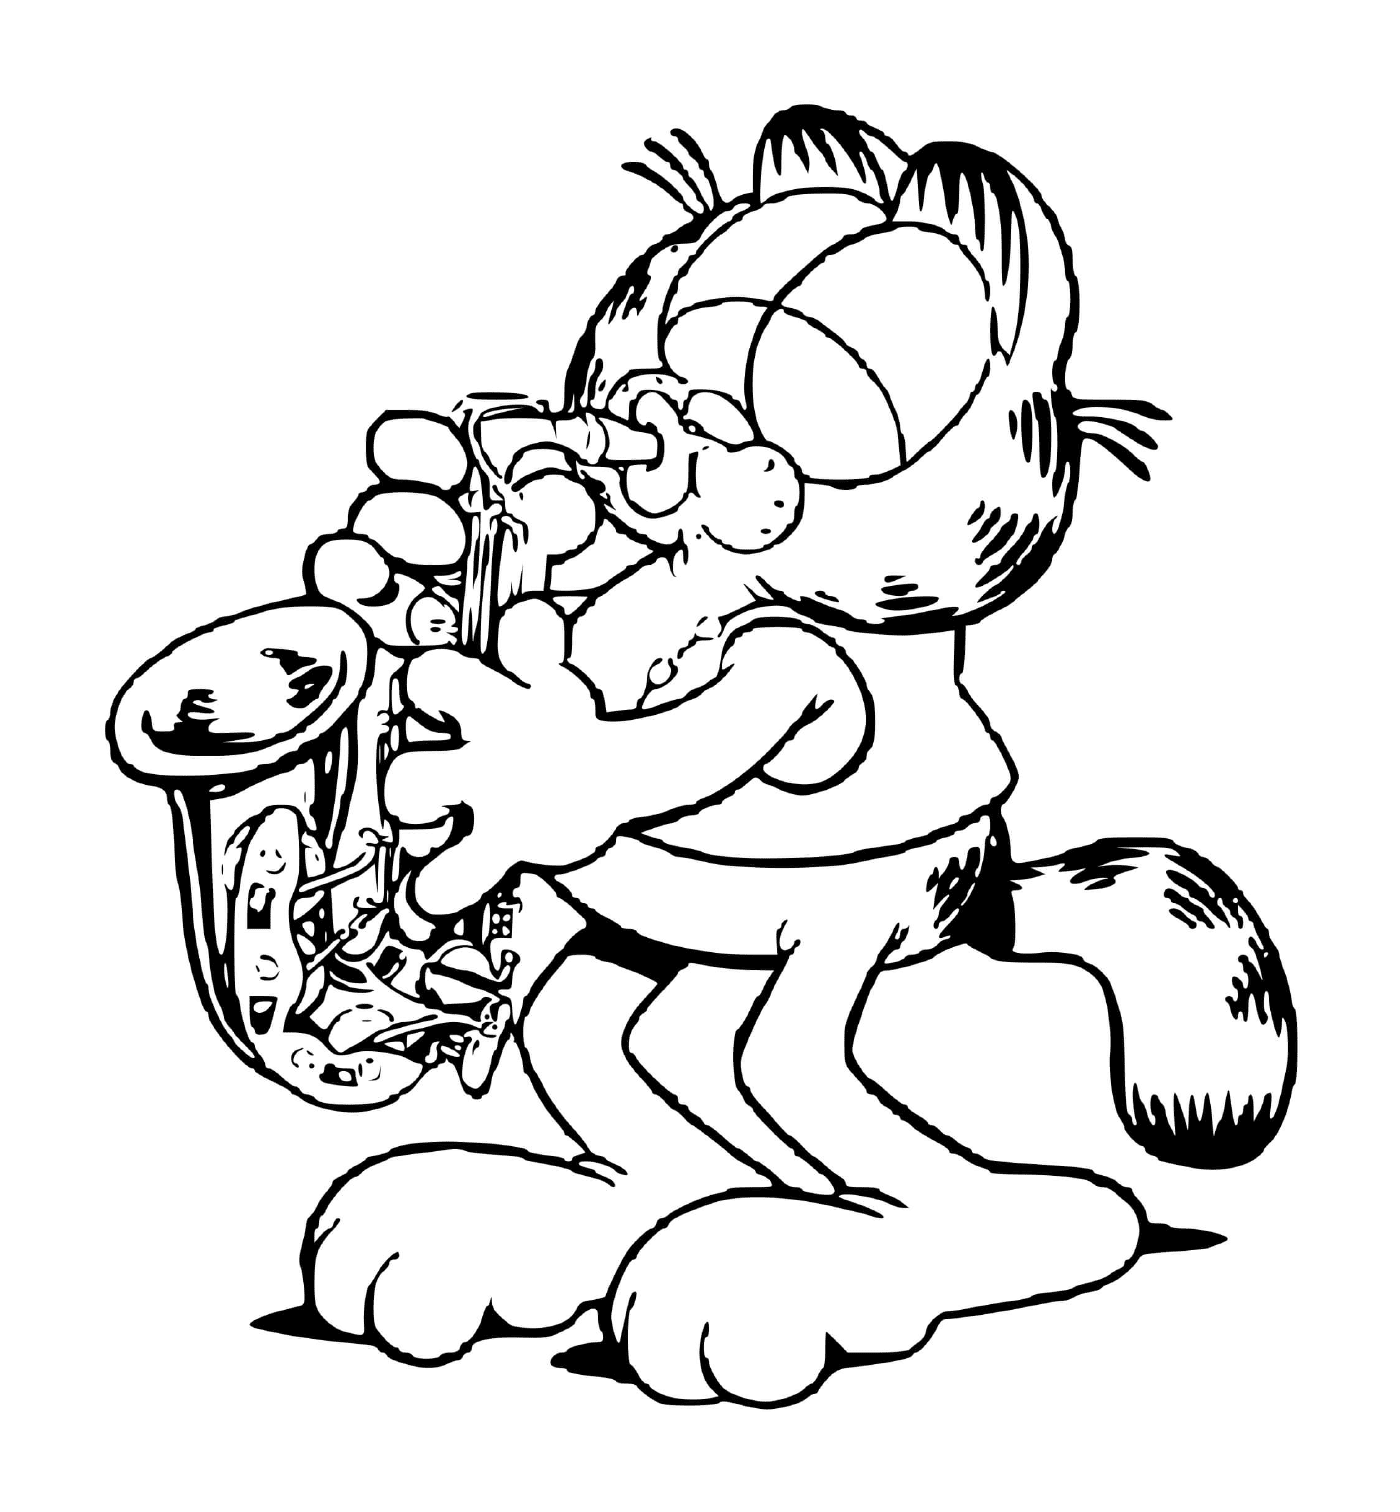  Garfield suona il sassofono 